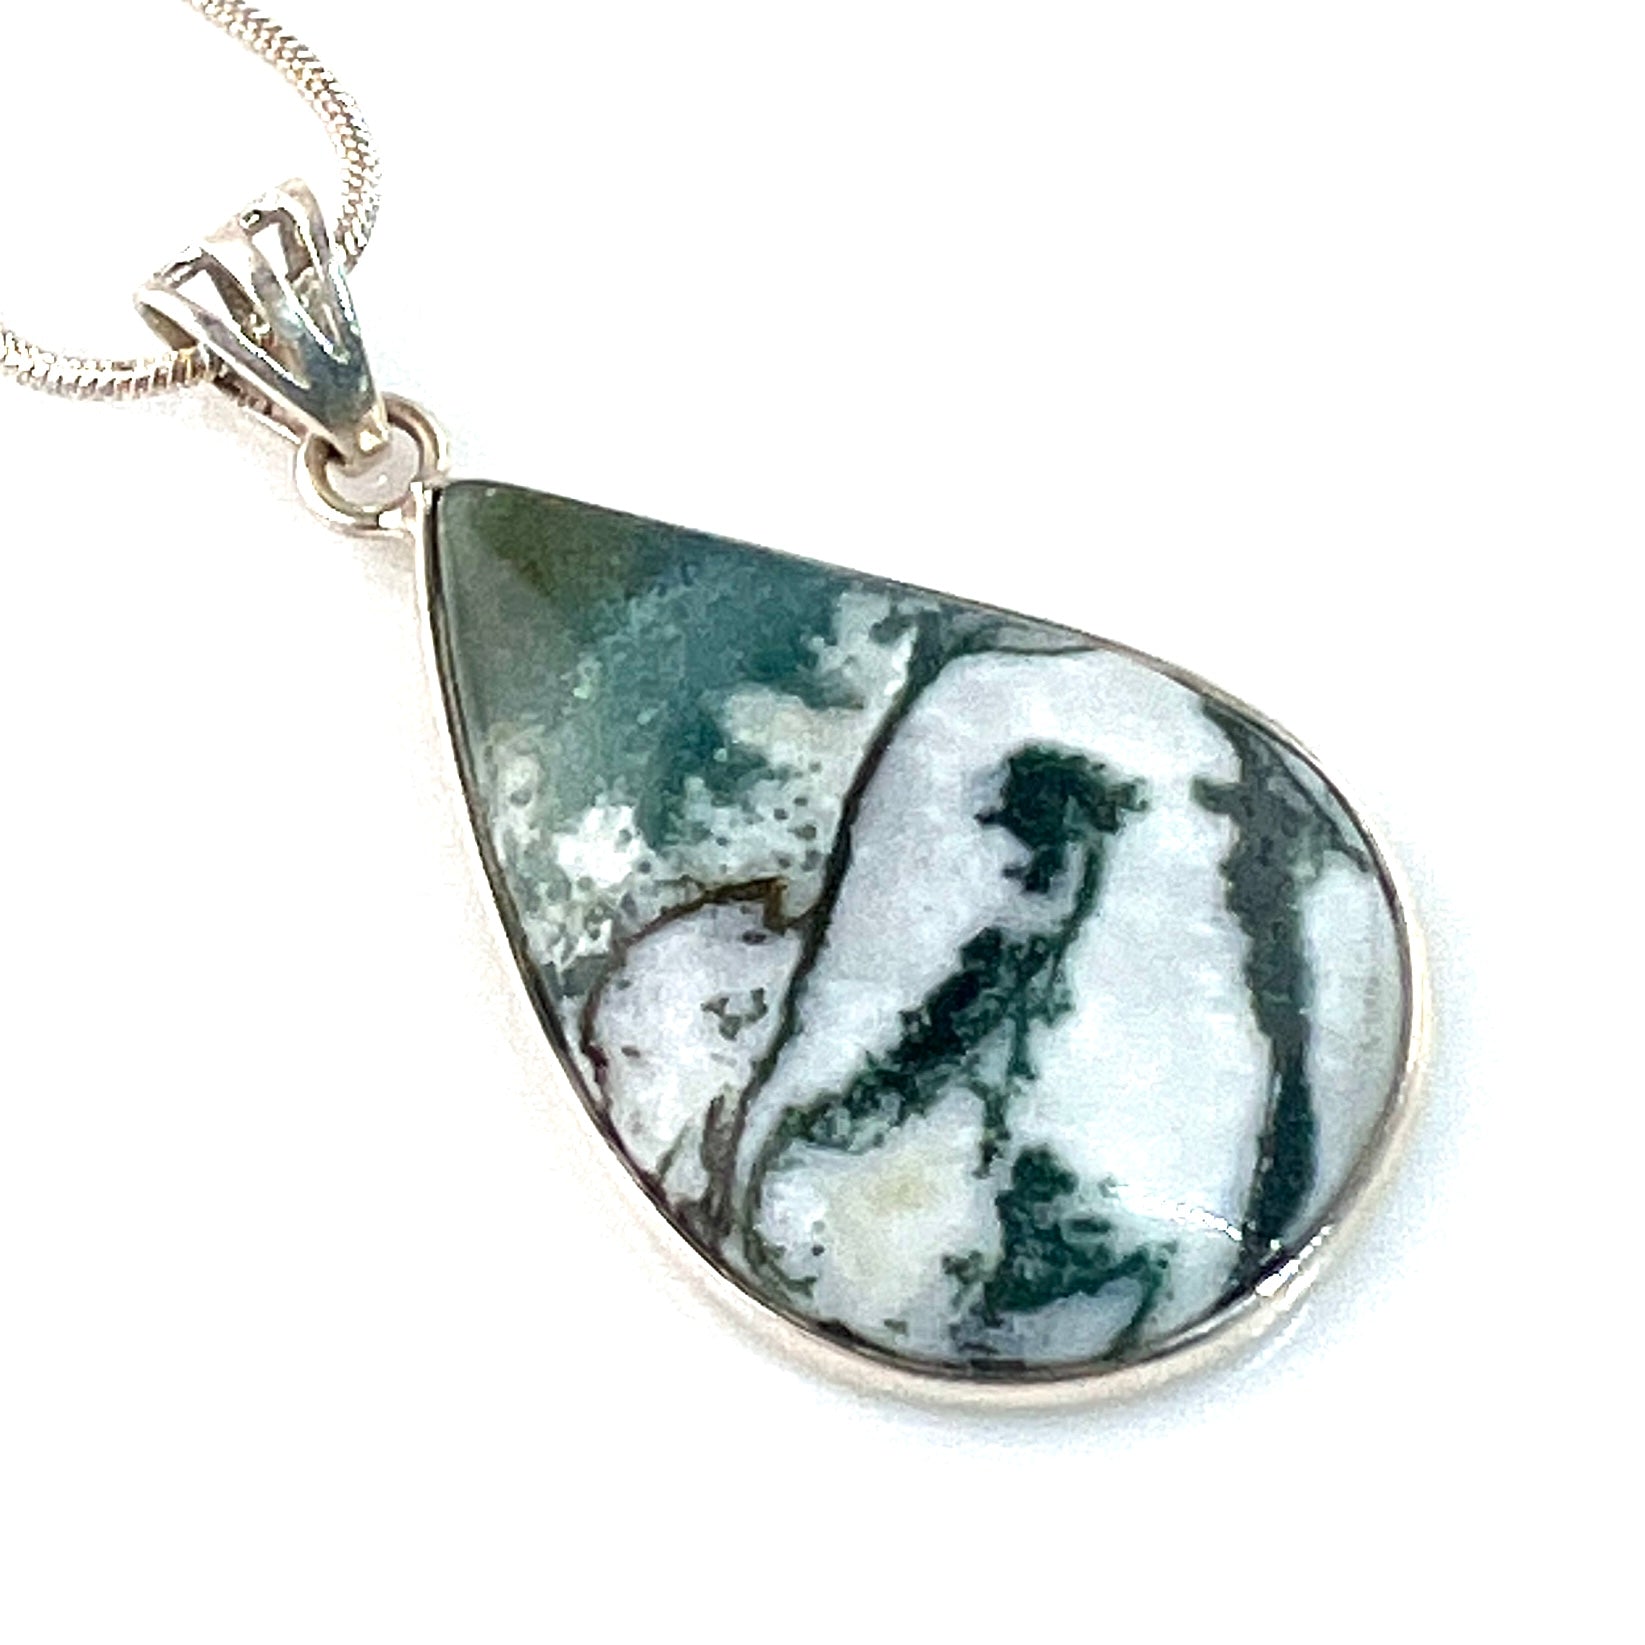 Aquaprase Pear Shaped Sterling Silver Pendant - Keja Designs Jewelry